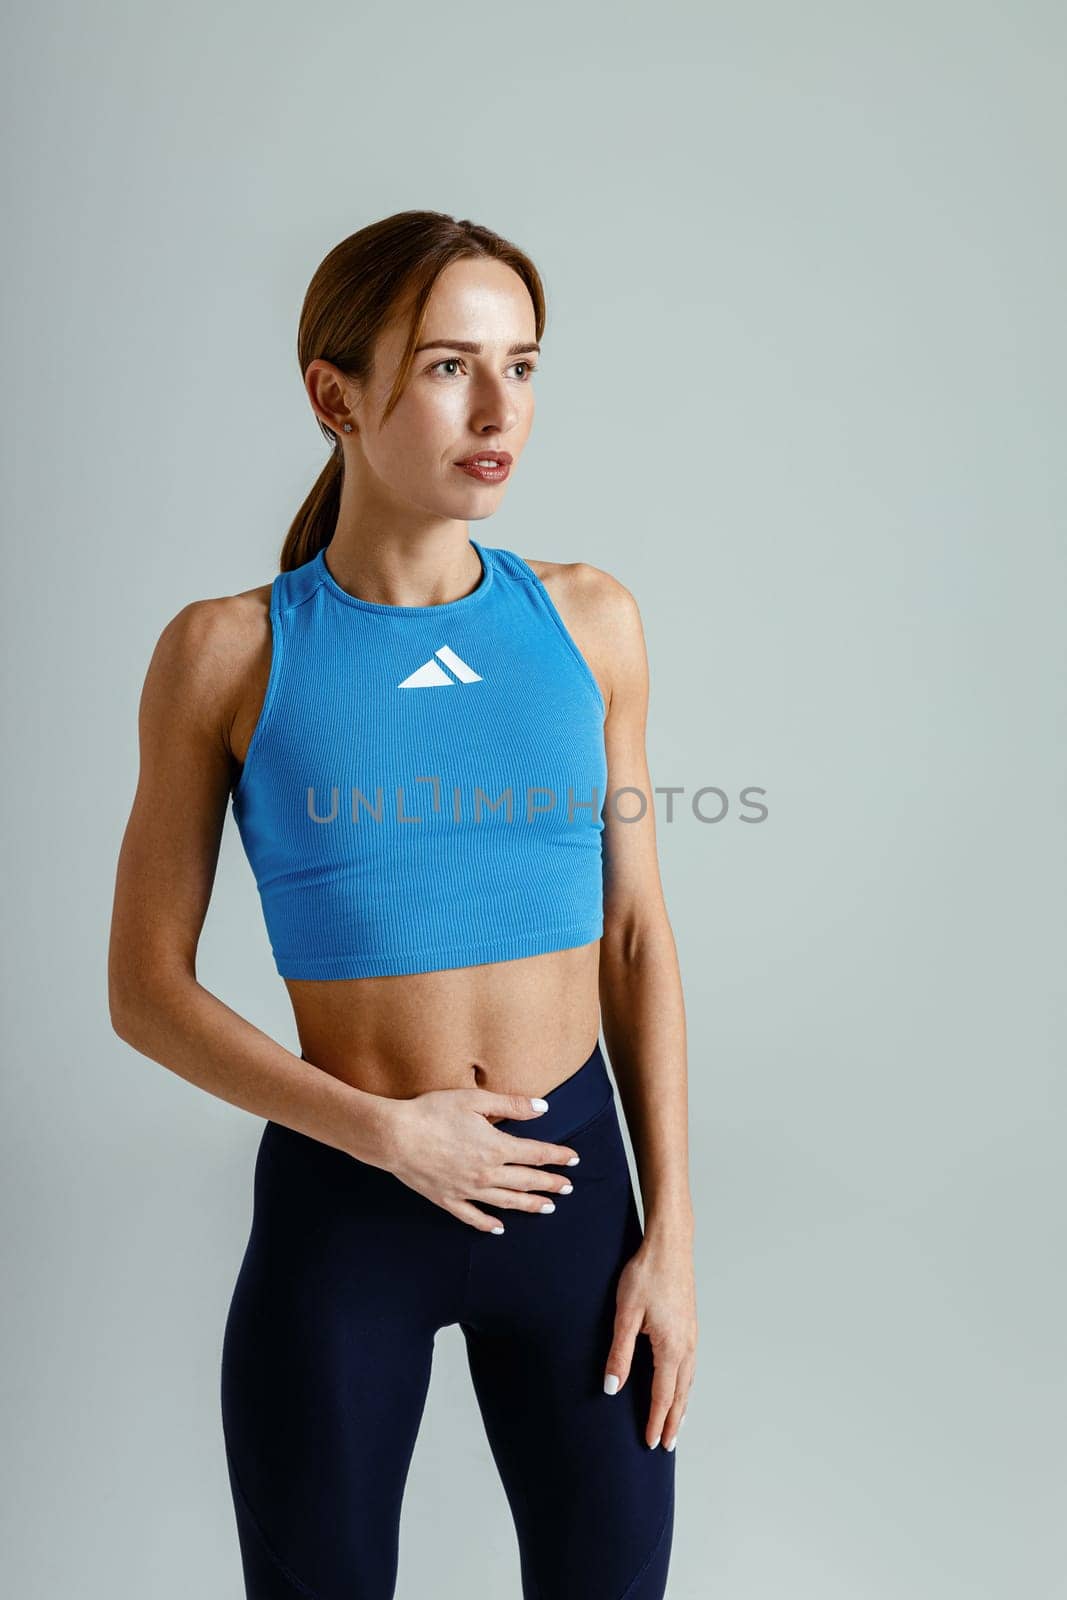 Attractive fitness woman wearing sportswear looking at side on studio background by Yaroslav_astakhov